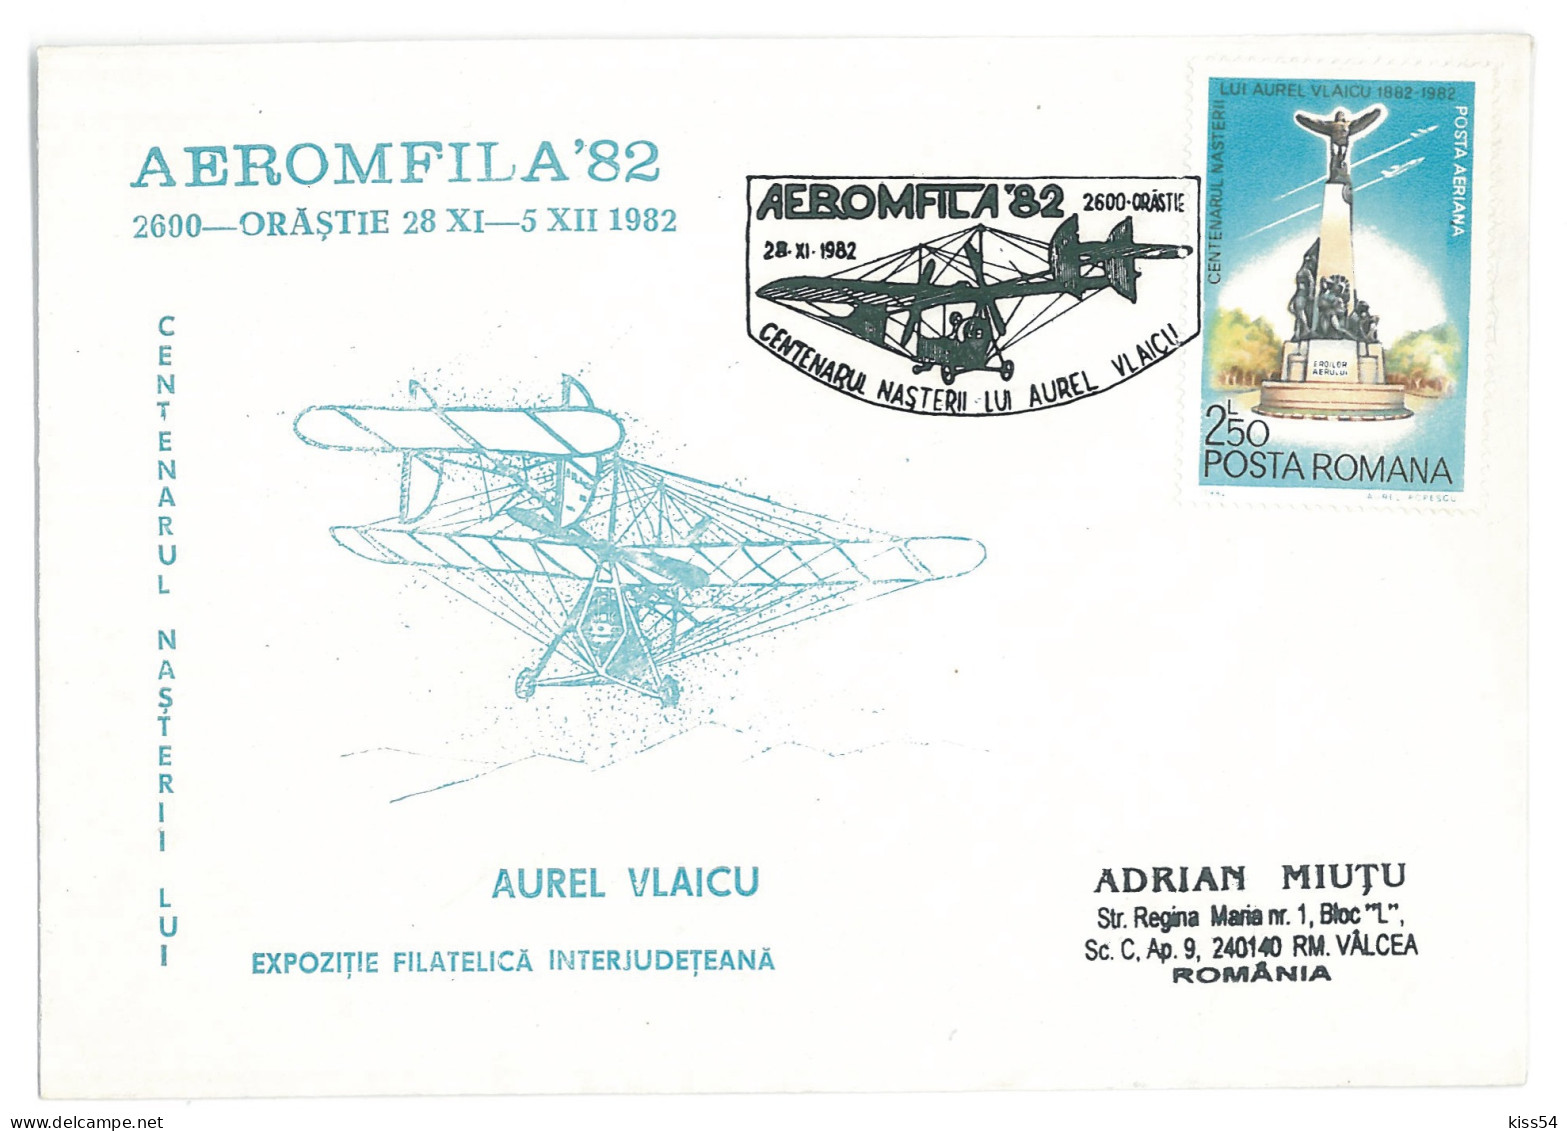 COV 75 - 224 AVIATIE, Aurel VLAICU, Orastie, Romania - Cover - Used - 1982 - Covers & Documents